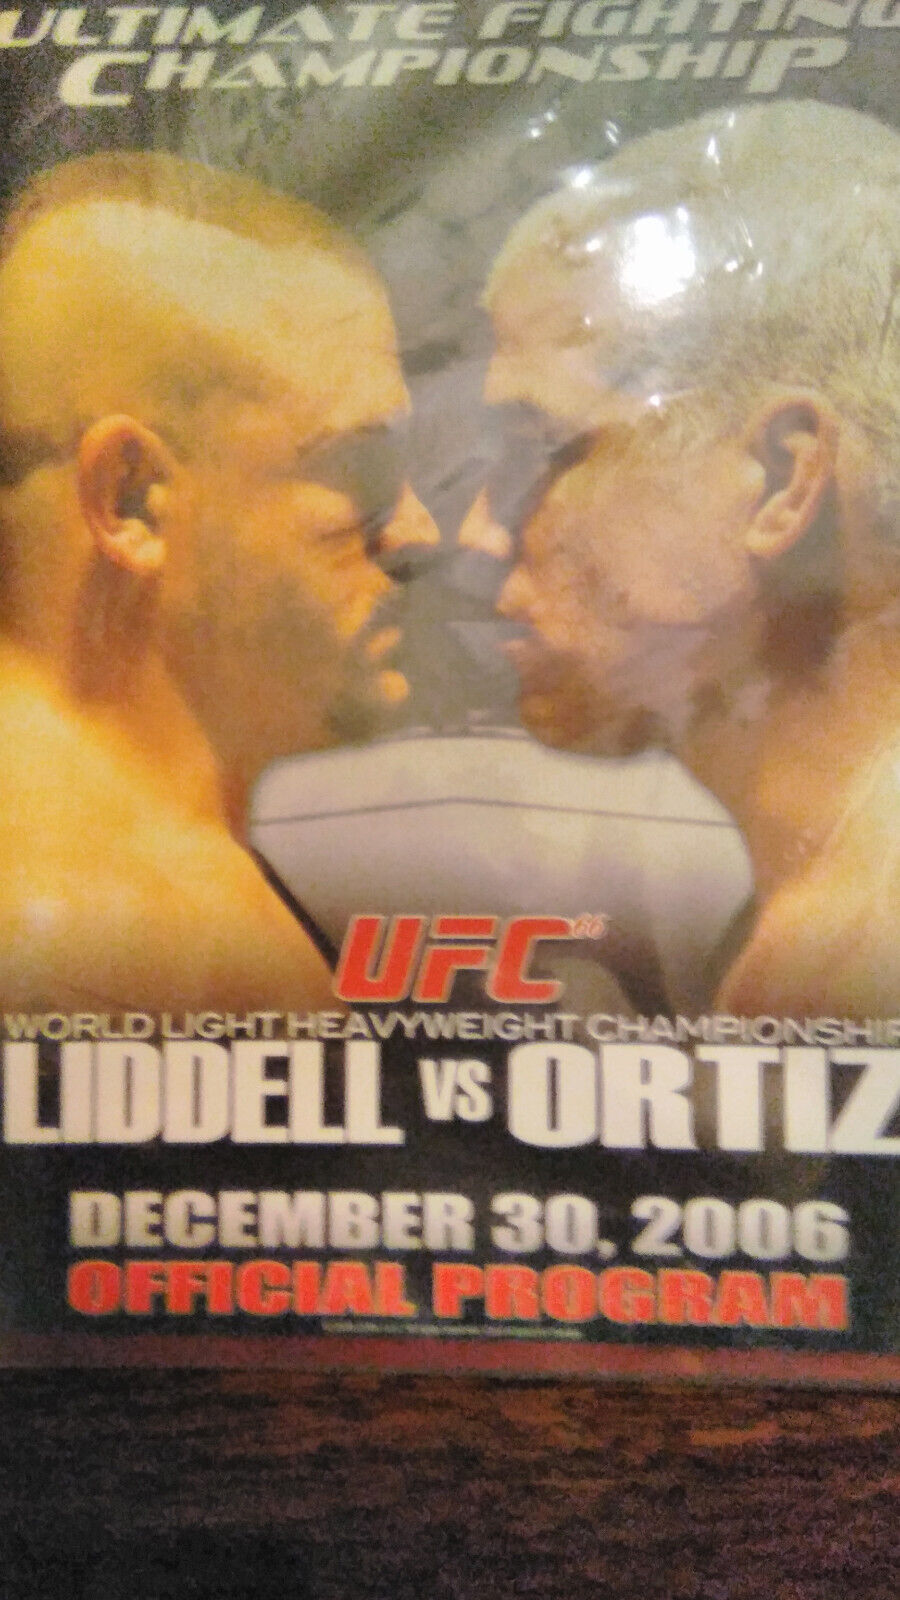 UFC 66 PROGRAM LIDDELL VS ORTHIZ